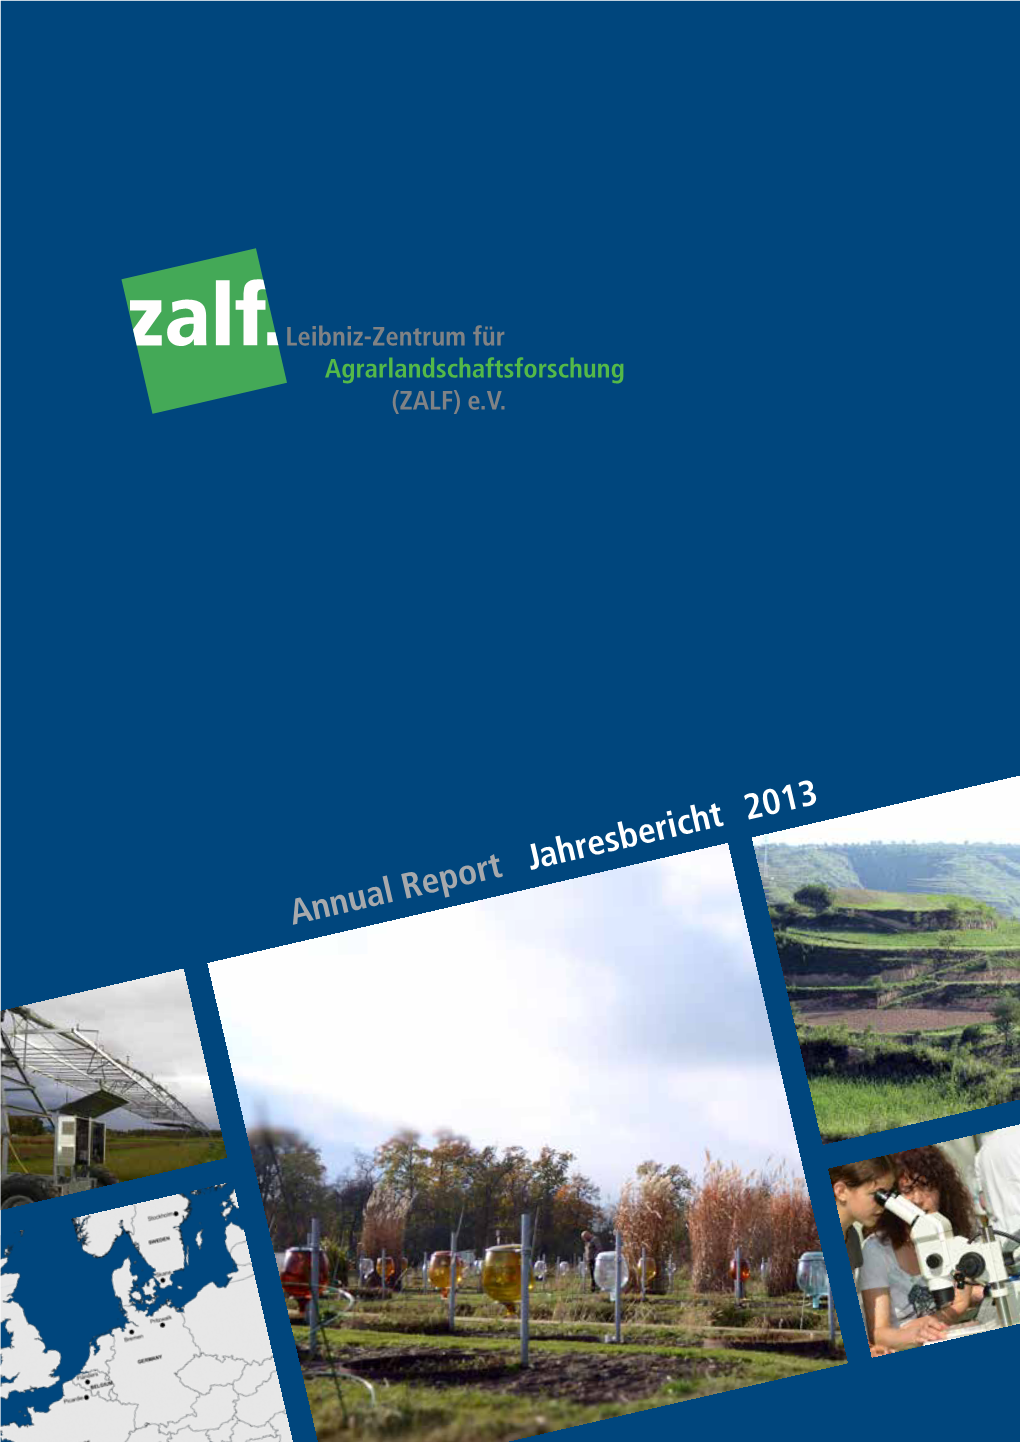 Annual Report Jahresbericht 2013